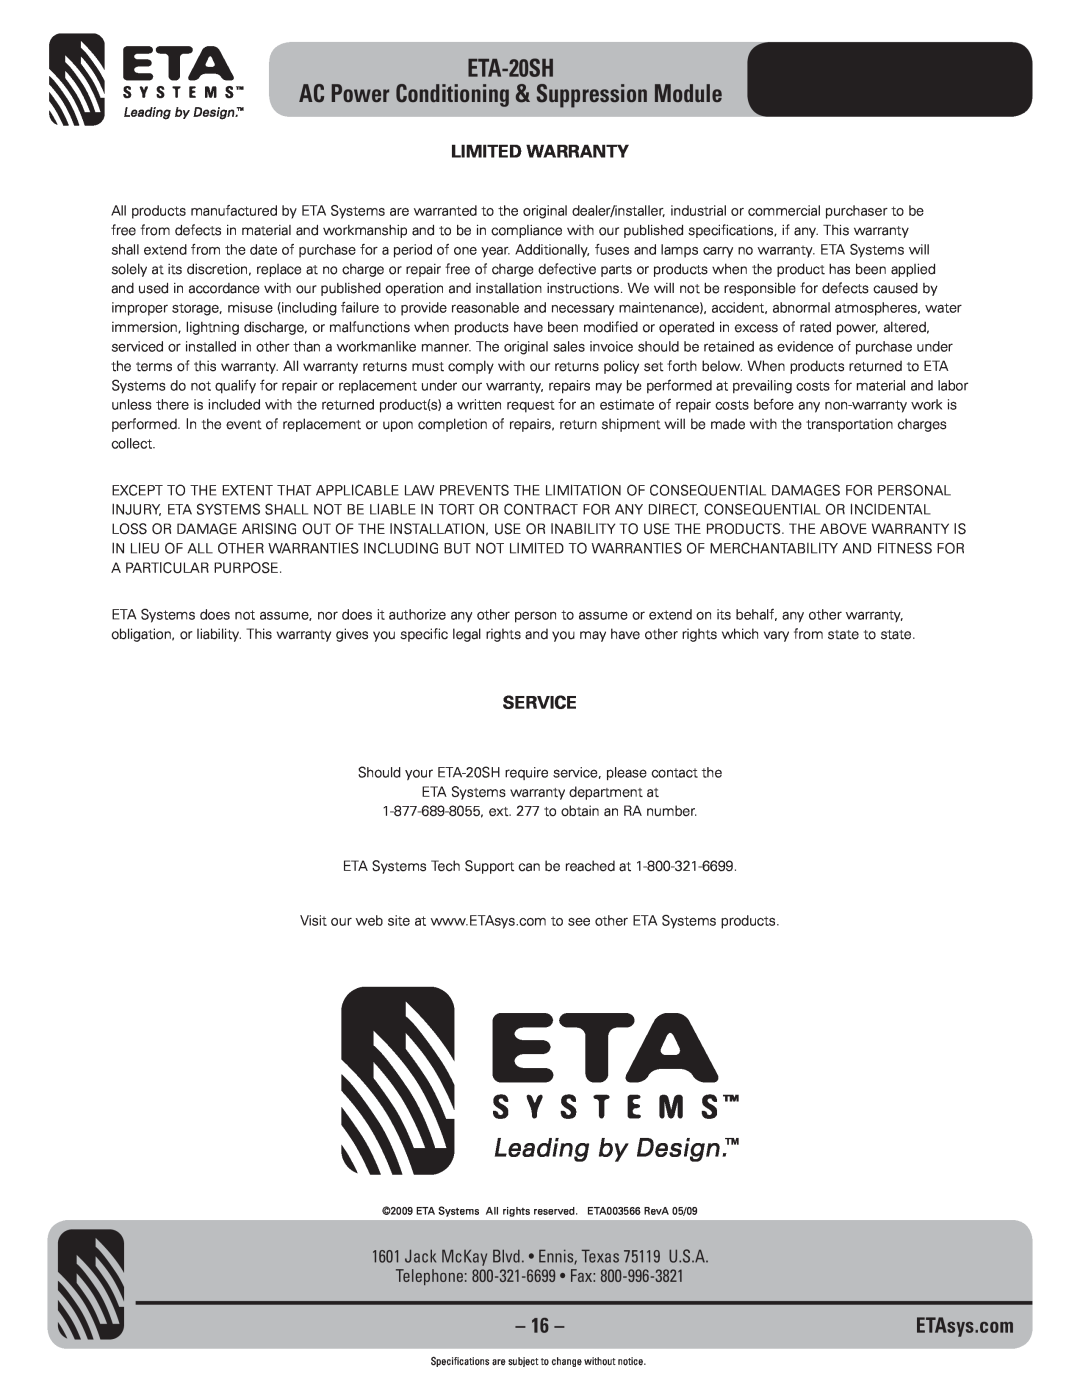 ETA Systems Limited Warranty, Service, ETA-20SH AC Power Conditioning & Suppression Module, Telephone 800-321-6699 Fax 